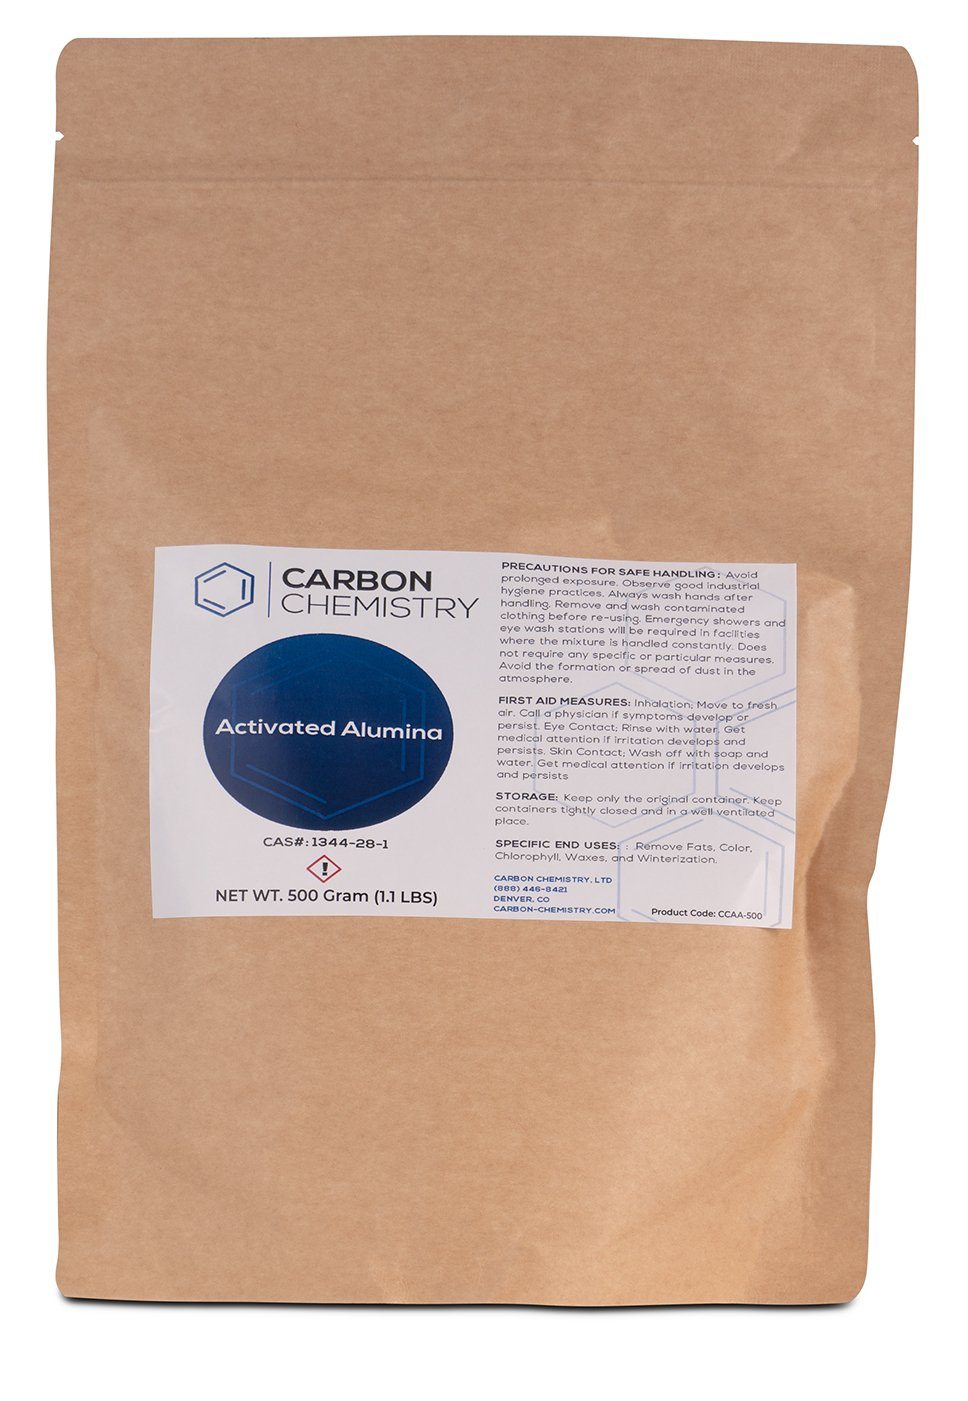 Carbon Chemistry LTD, Carbon Chemistry Activated Alumina